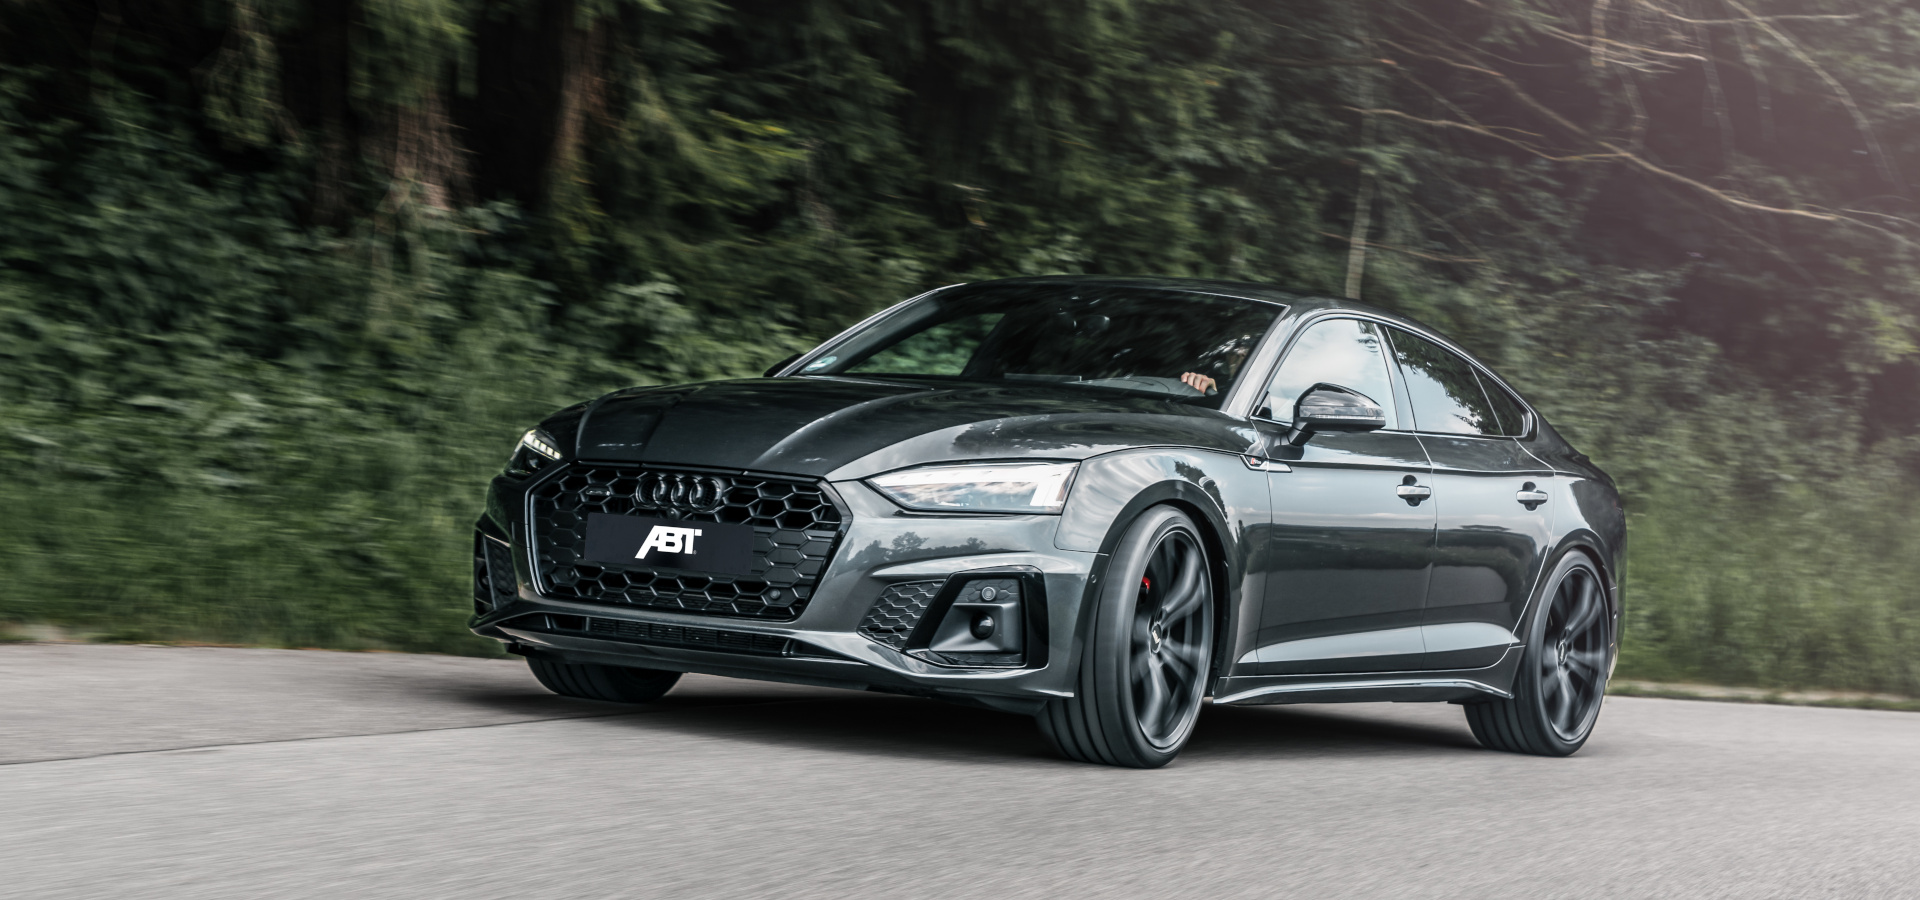 Audi A5-Tuning: Abt-Version mit 300 PS - firmenauto